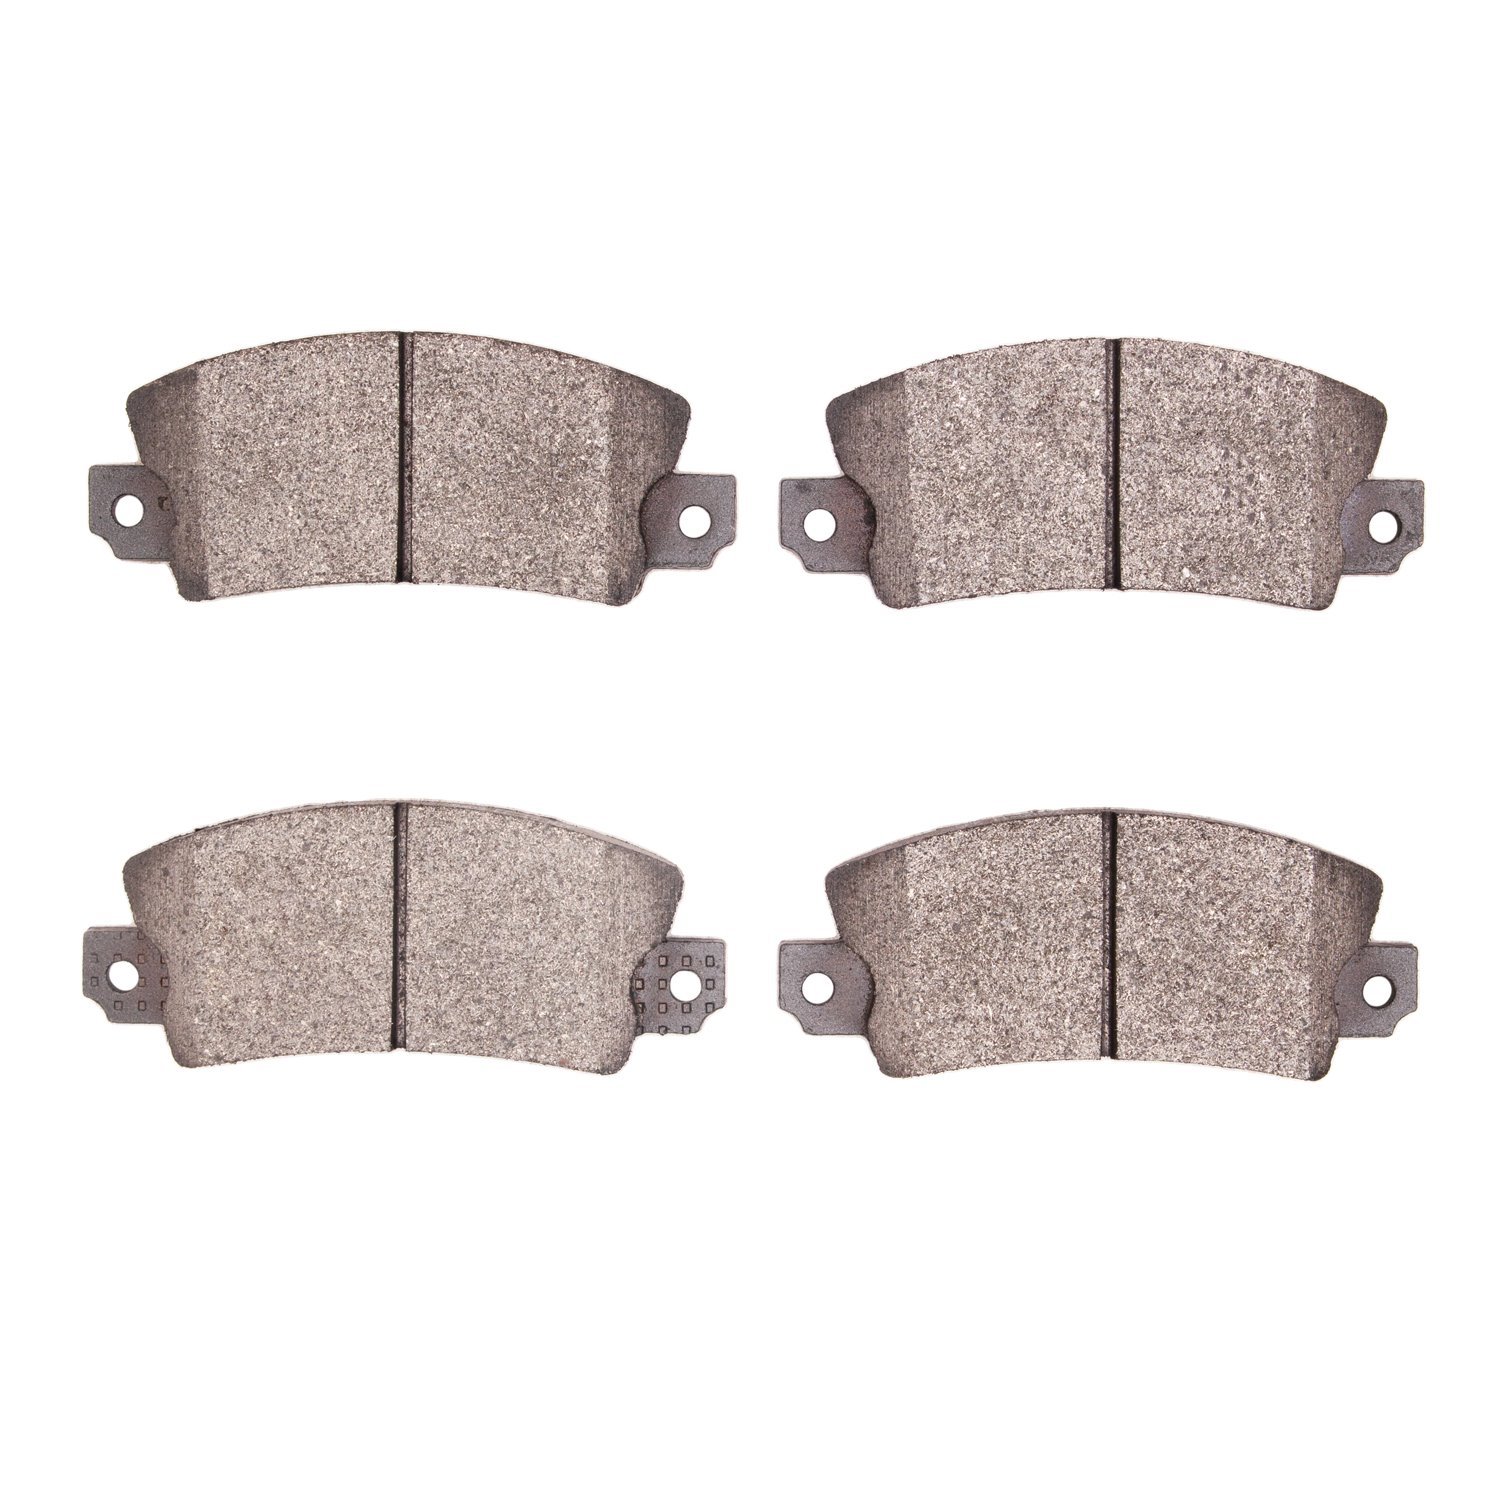 Semi-Metallic Brake Pads, 1971-1988 Fits Multiple Makes/Models, Position: Front & Rear